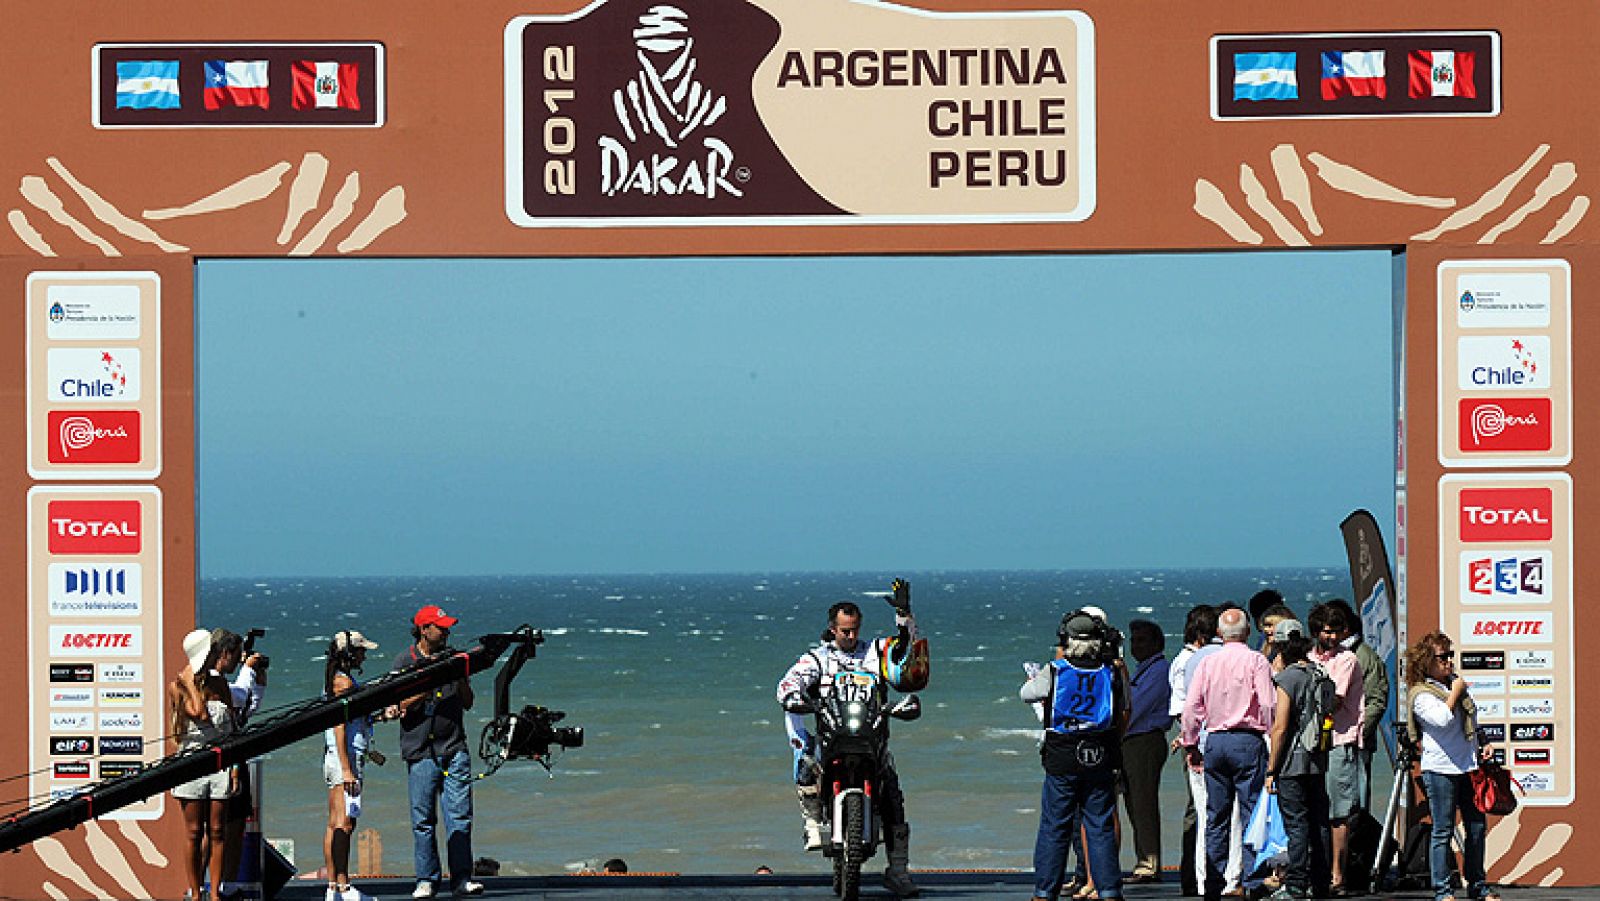 Rally Dakar 2012 - Etapa 1 (Mar del Plata - Santa Rosa de la Pampa) - 01/01/12 - Ver ahora